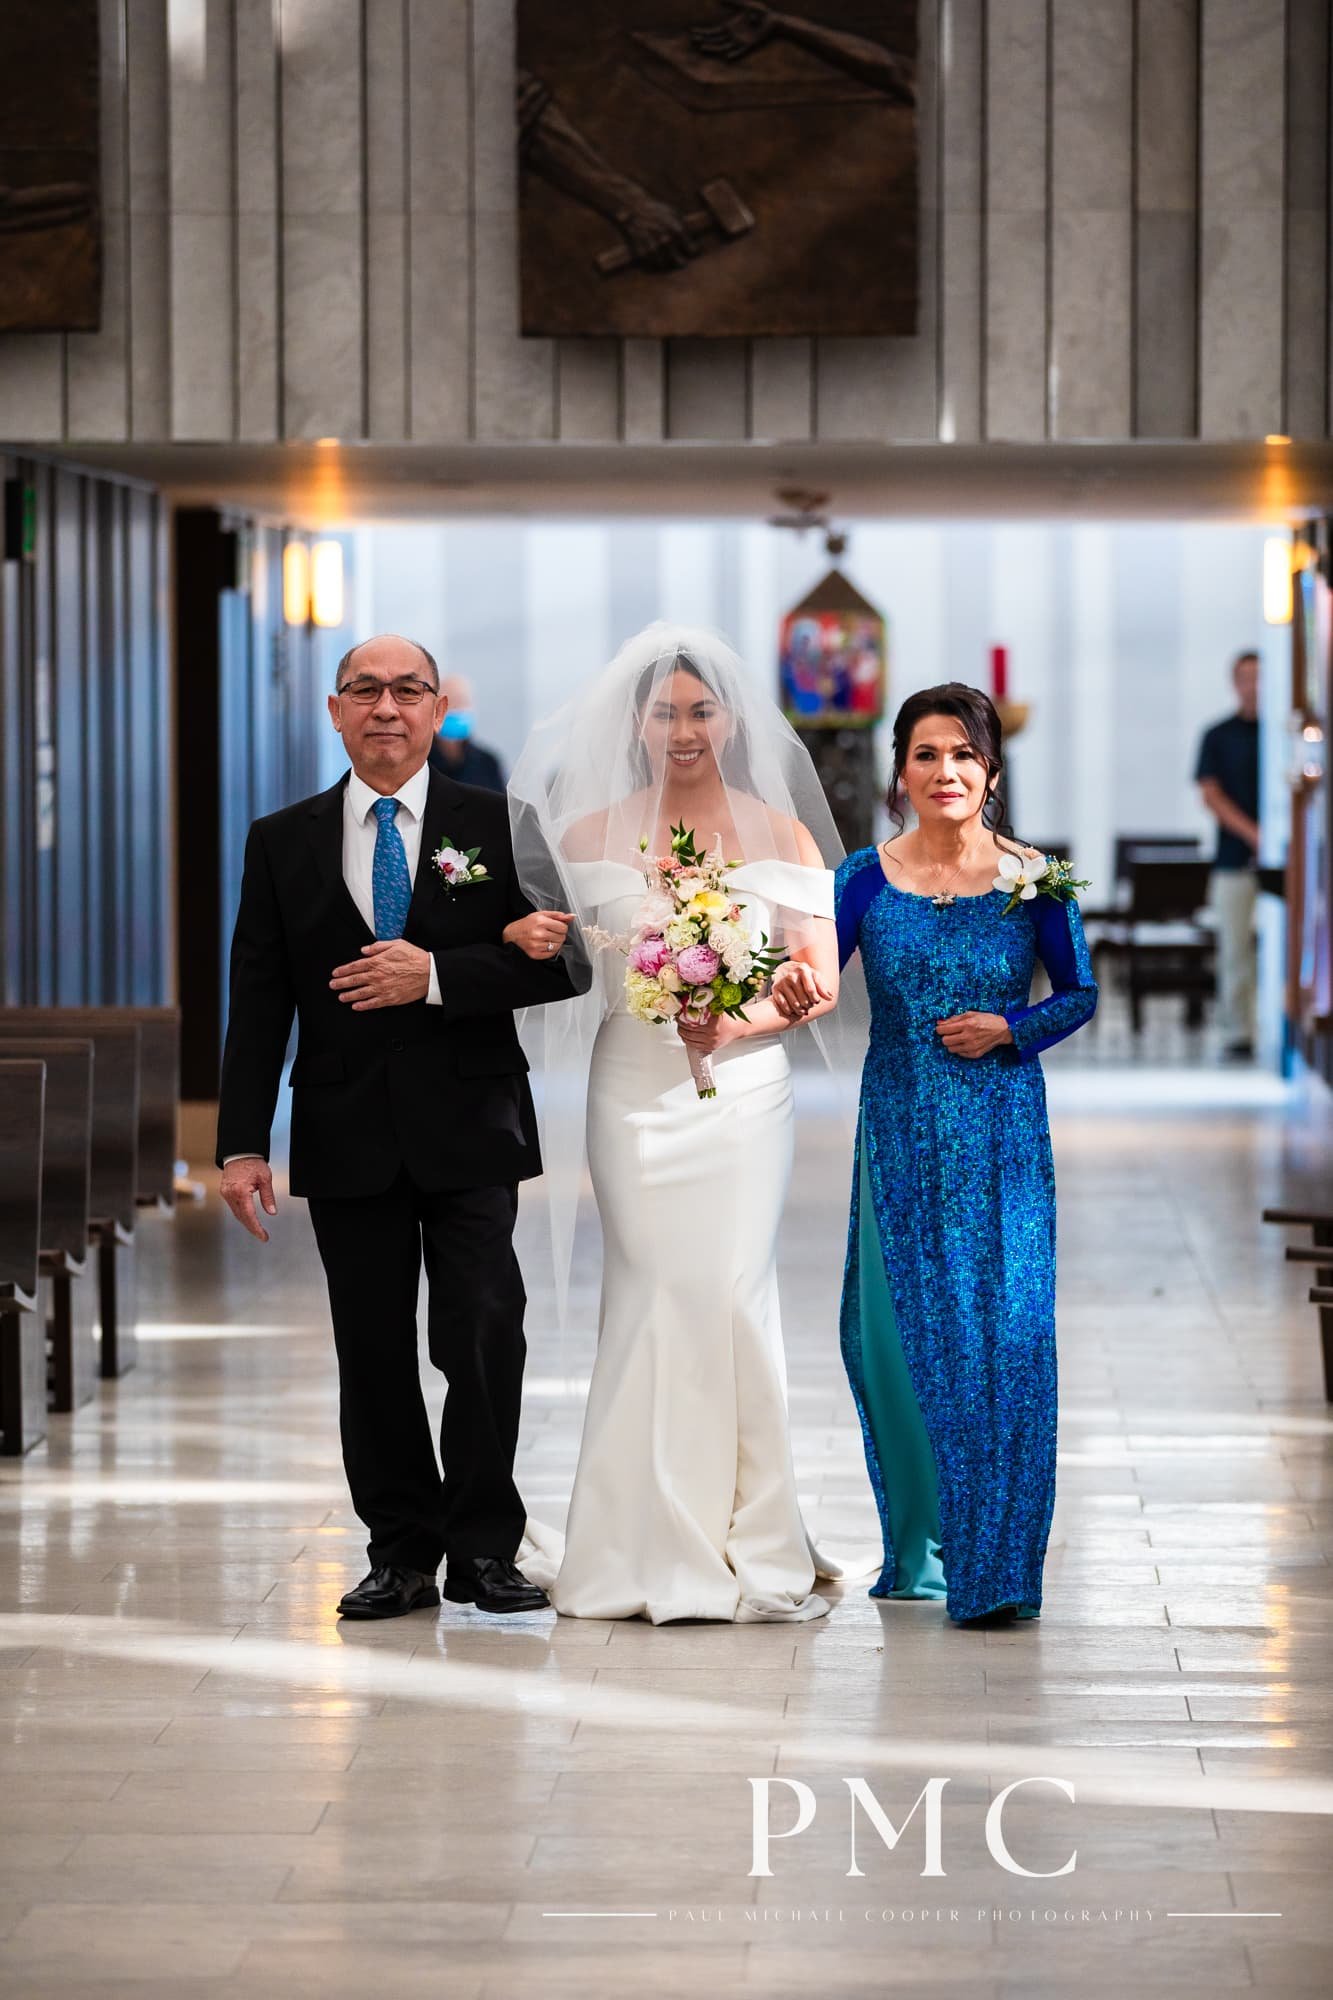 Christ Cathedral and Marriott Irvine Spectrum Wedding - Best Orange County Wedding Photographer-38.jpg